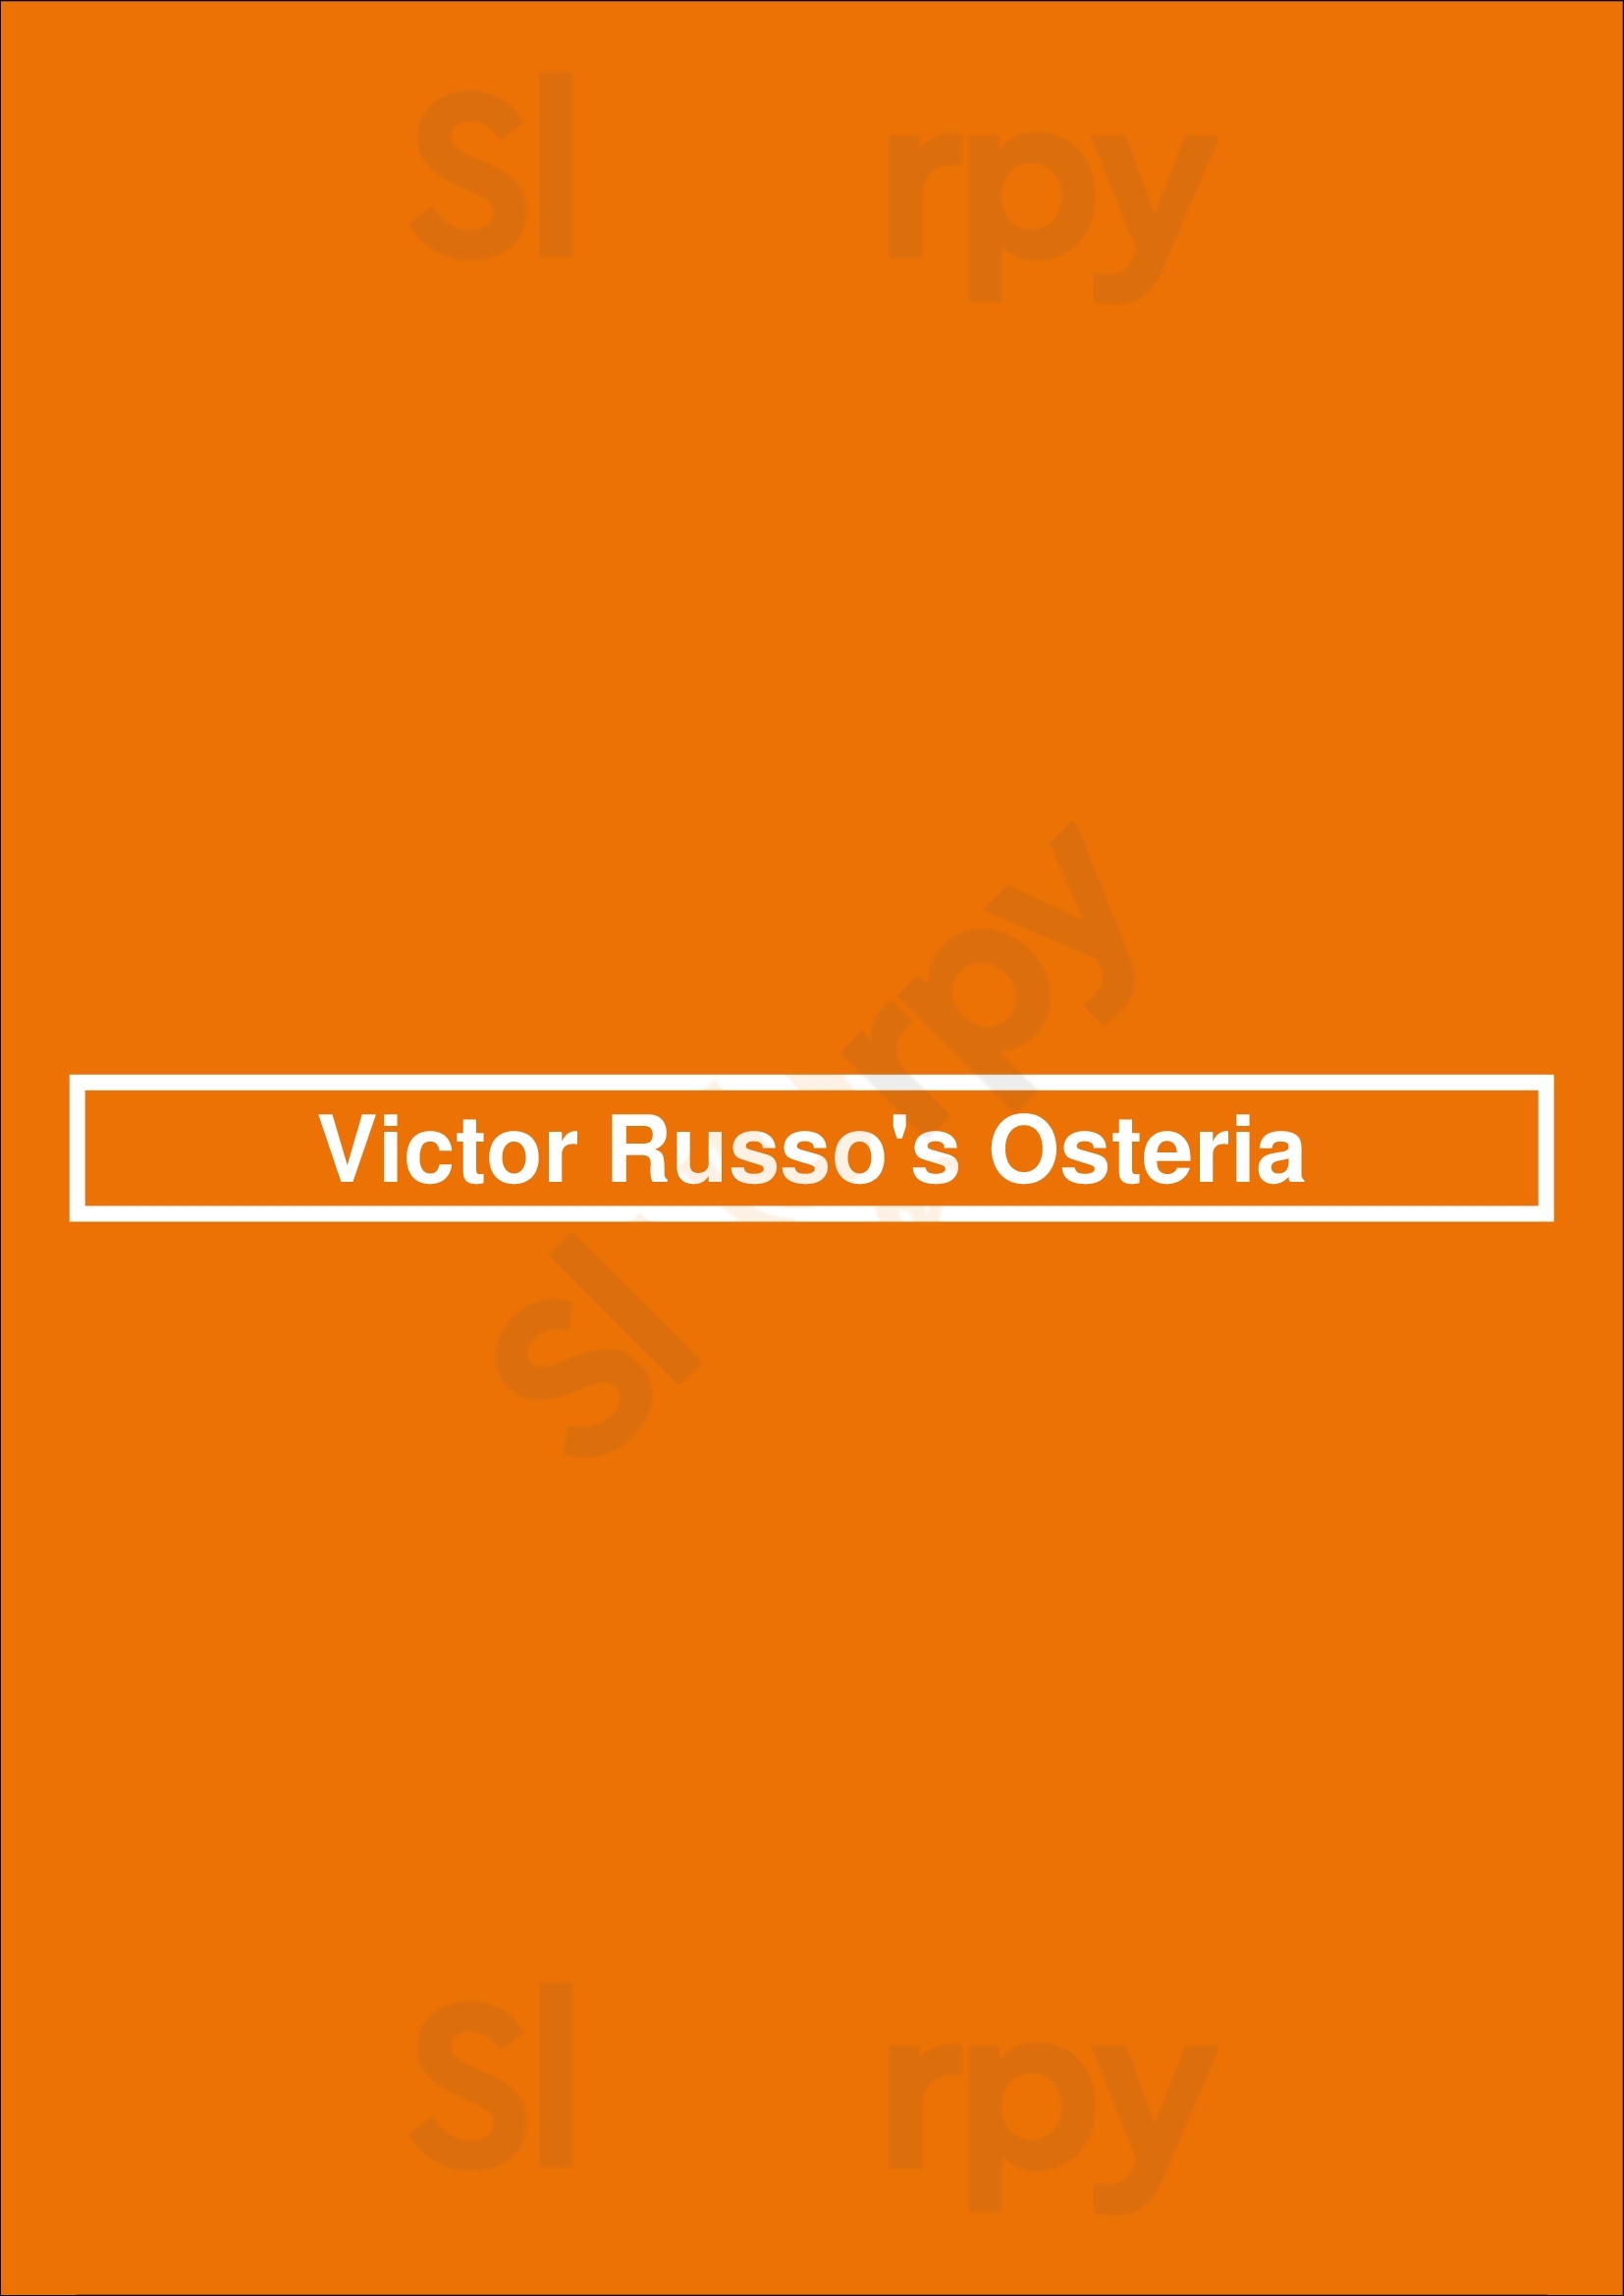 Victor Russo's Osteria Leiden Menu - 1